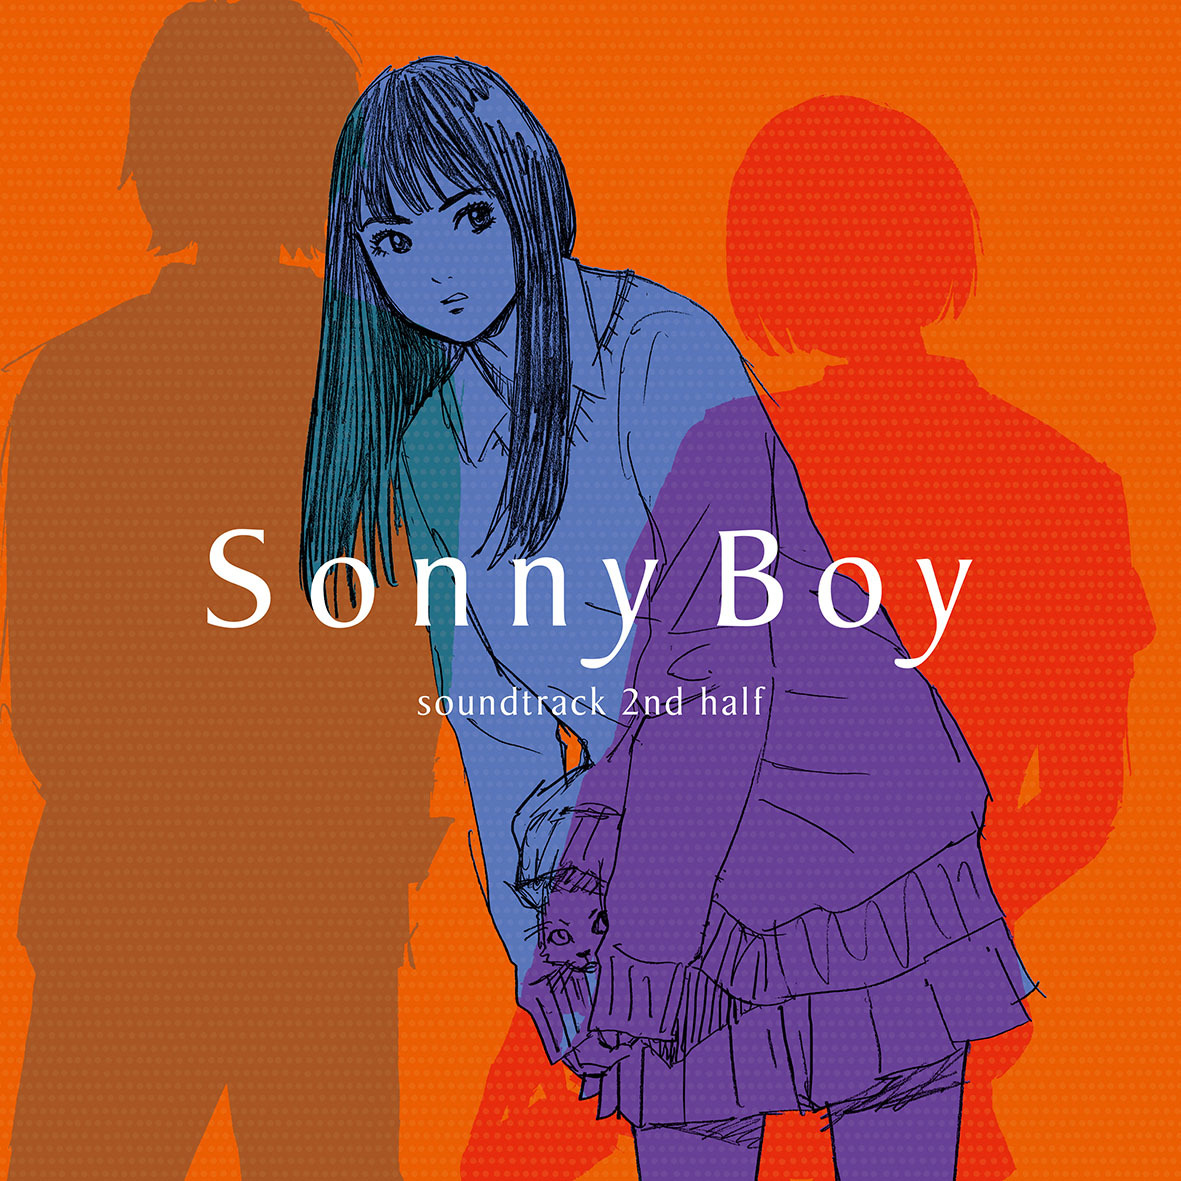 『soundtrack 2nd half』（アナログ）ジャケット (c)Sonny Boy committee